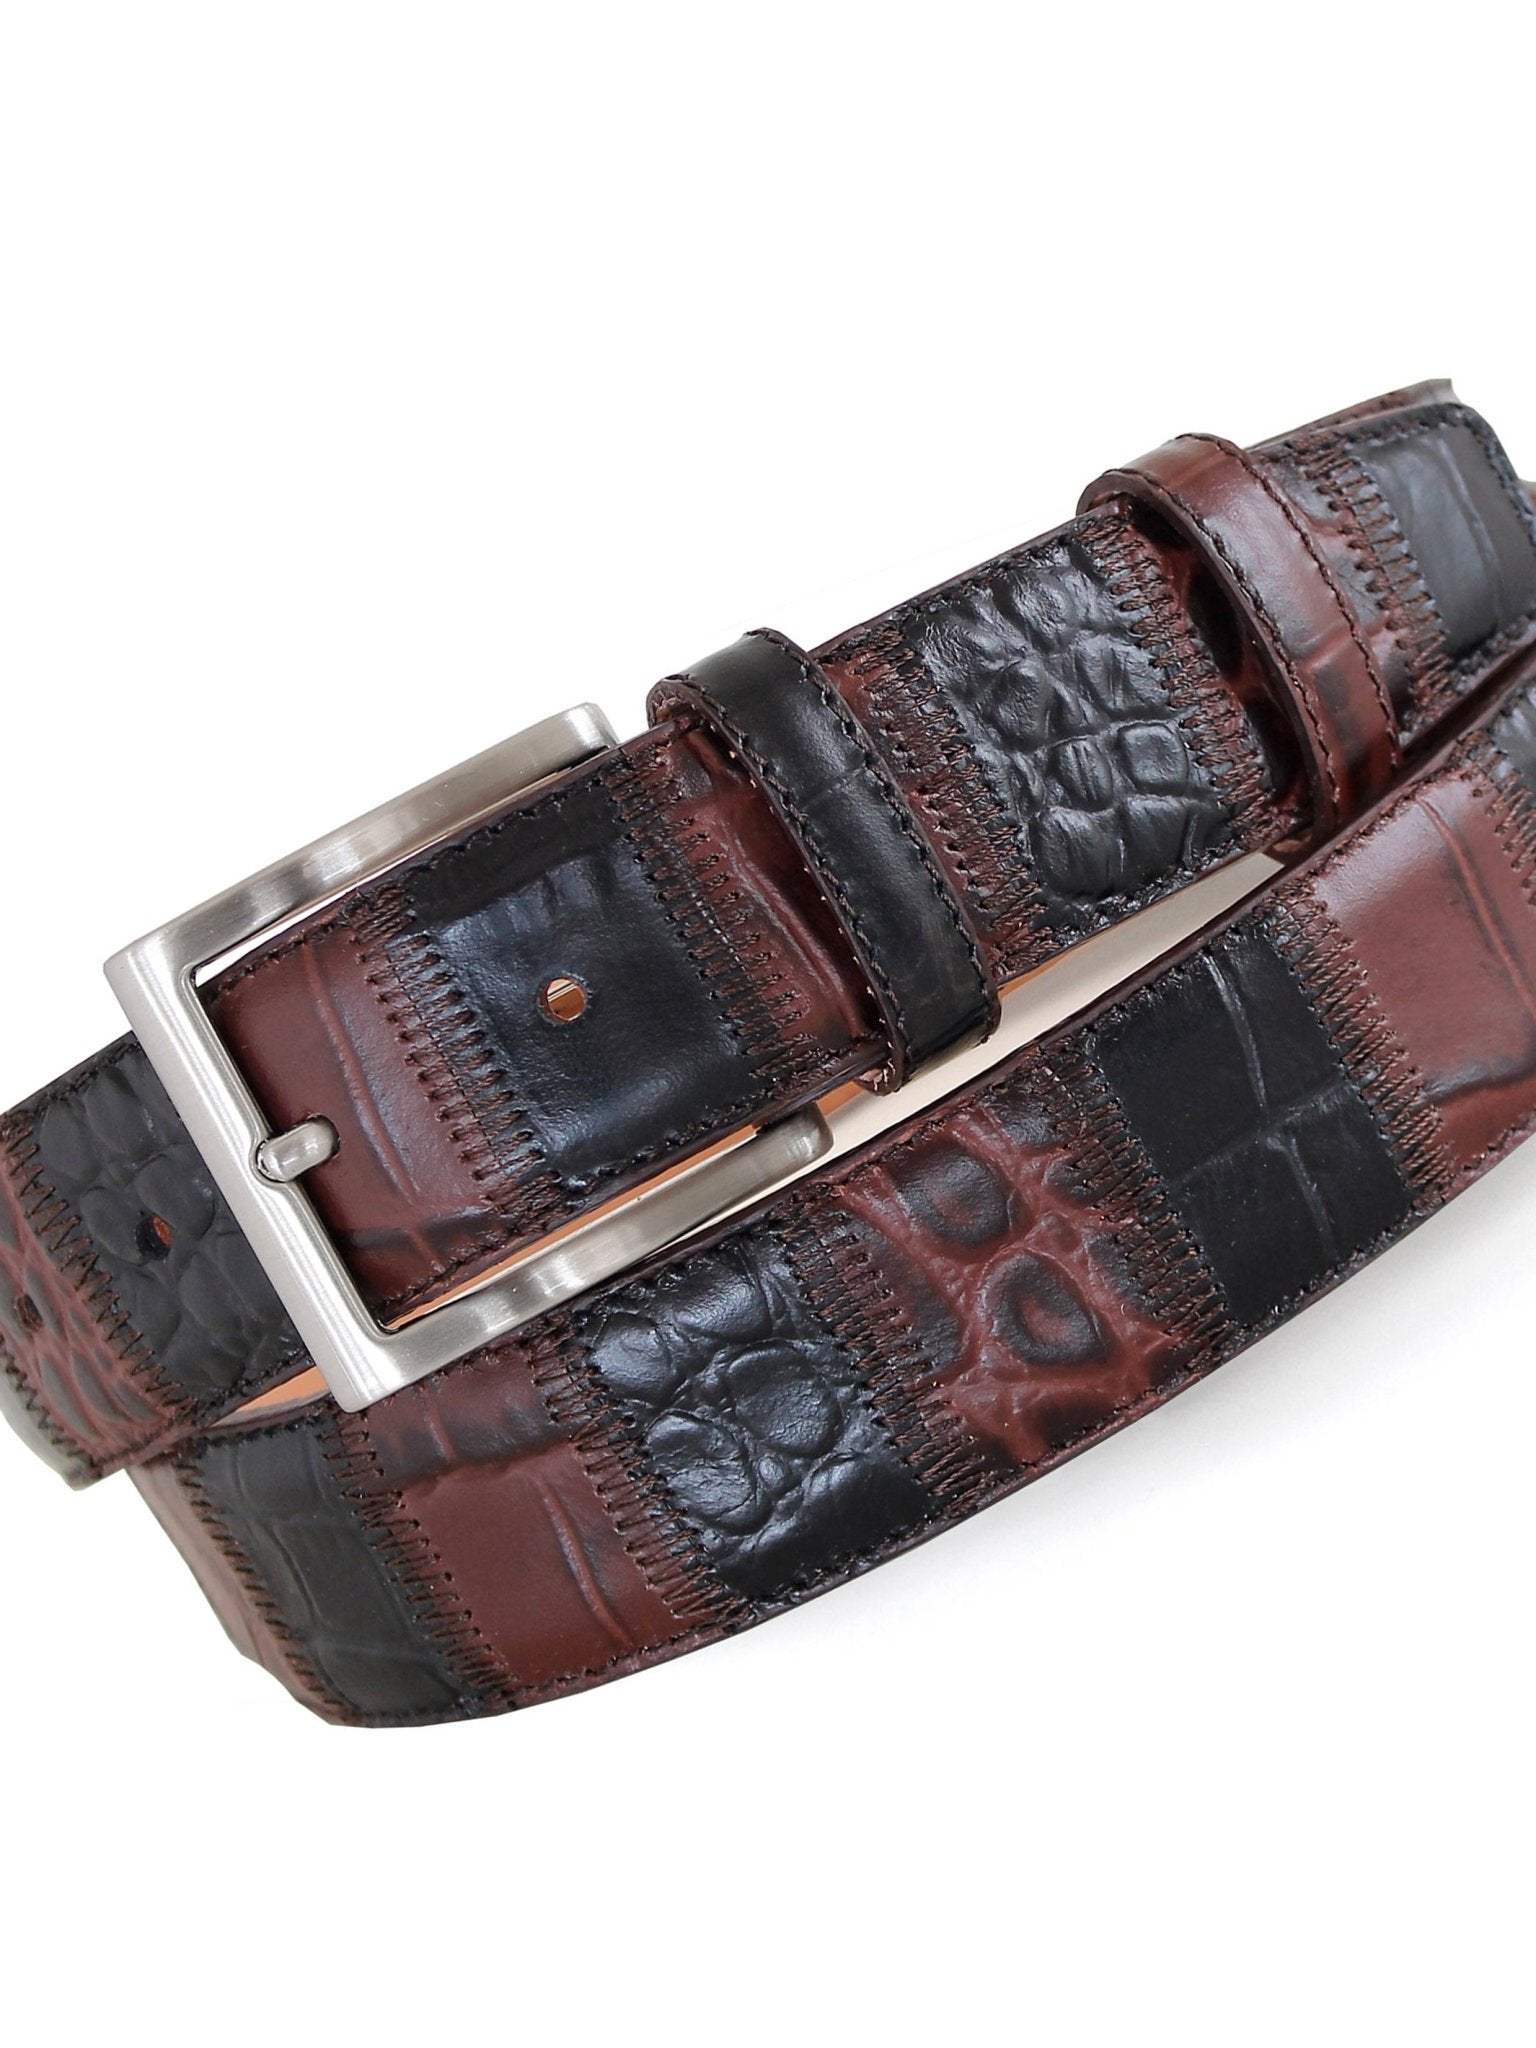 4elementsclothingRobert CharlesRobert Charles Belts - 1715 Black & Brown Patchwork belt 35mm - Made in Italy - 100% LeatherBelts1715/35/S